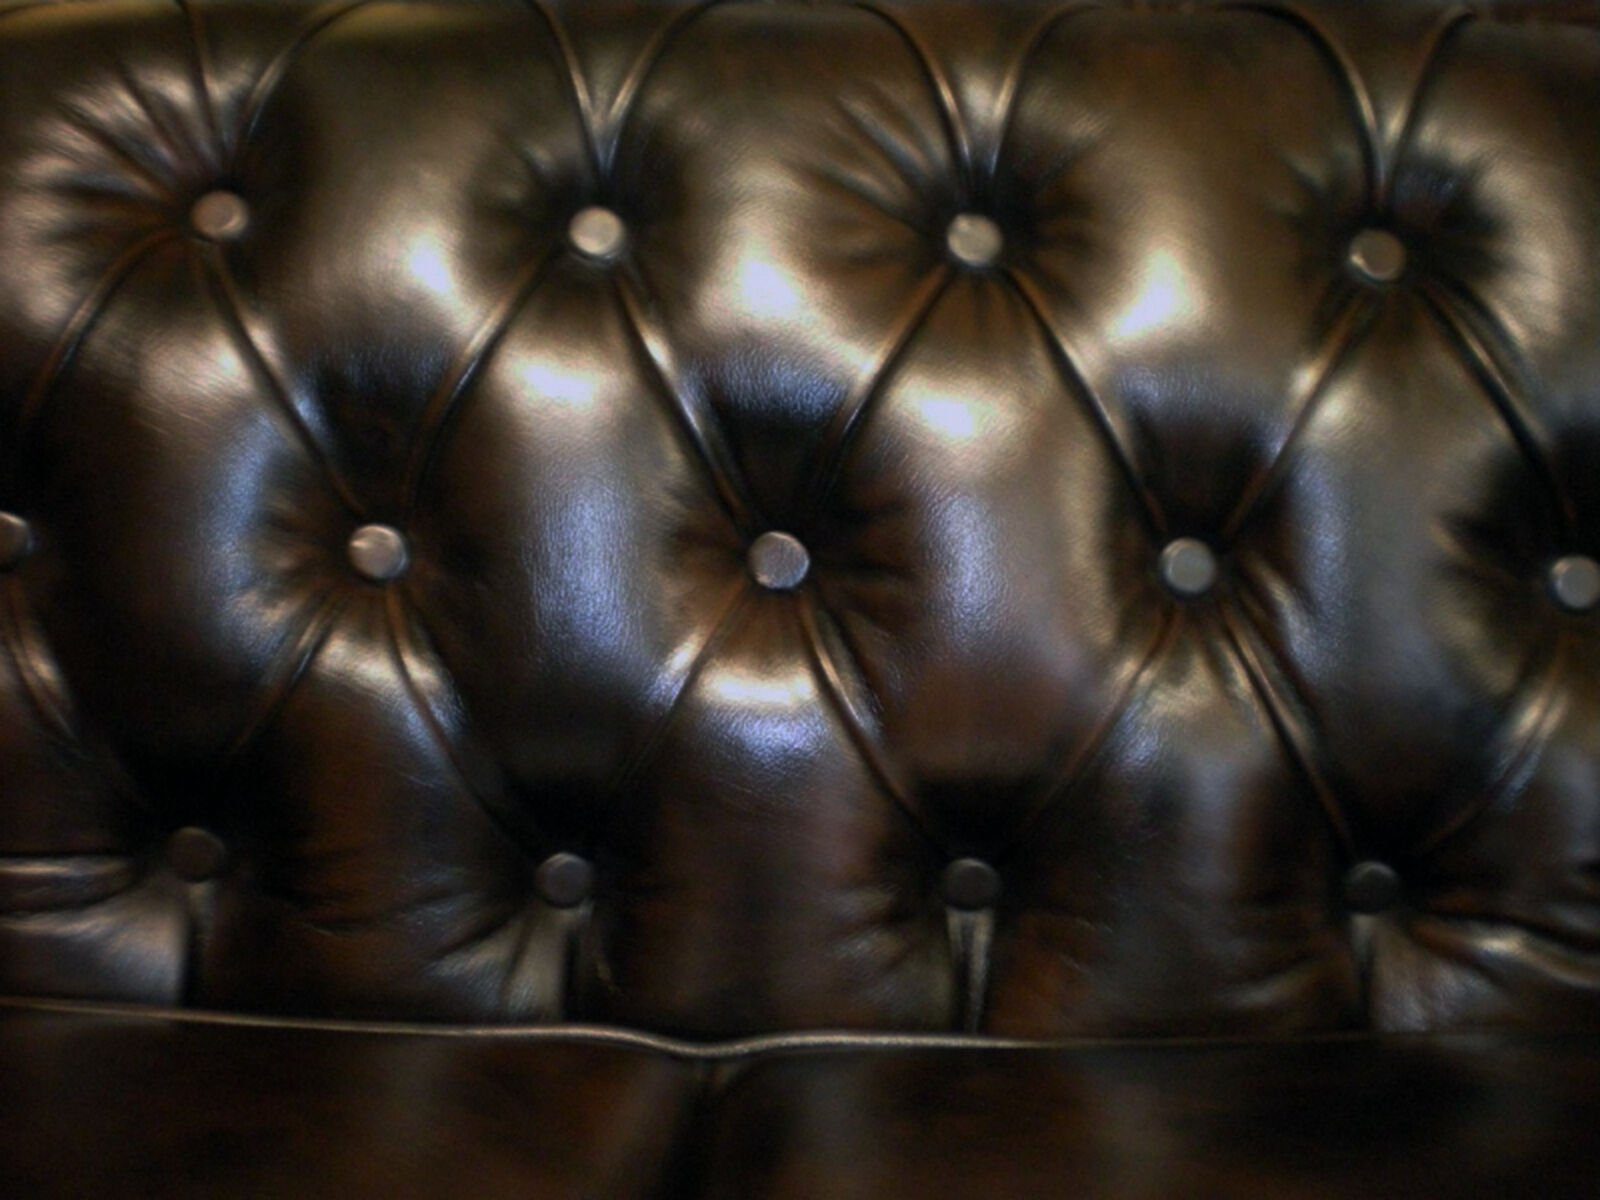 Couch Sofa Sitzer JVmoebel mit Polster 3 Sofa Chesterfield Bettfunktion